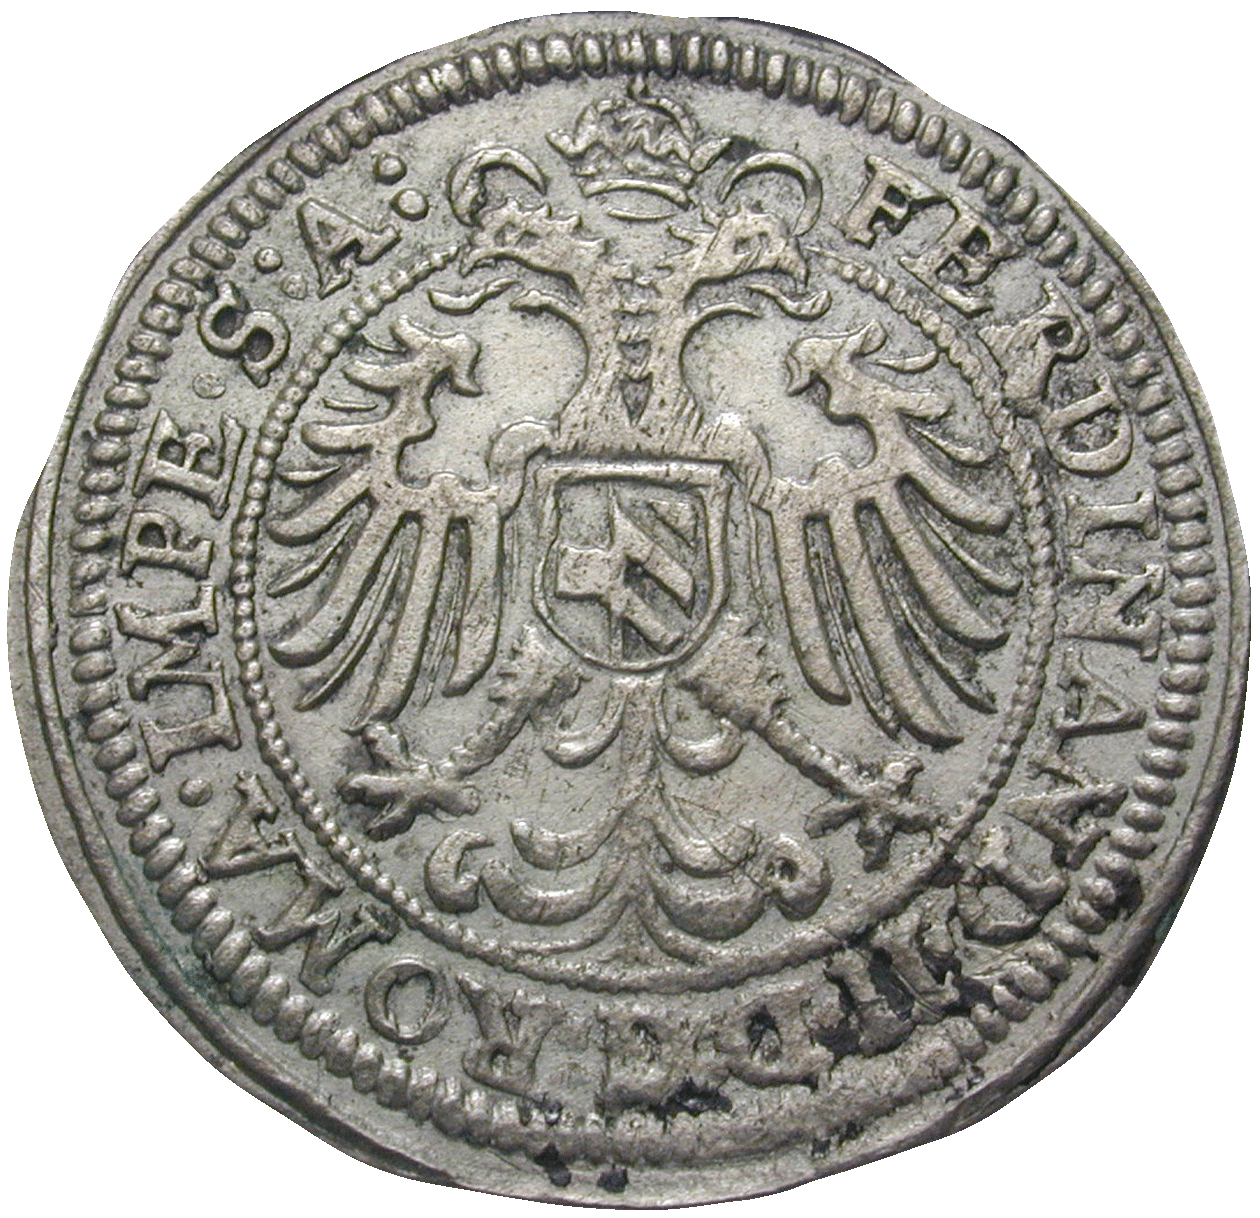 Holy Roman Empire, City of Nuremberg, Kipper worth 15 Kreuzer 1622 (reverse)